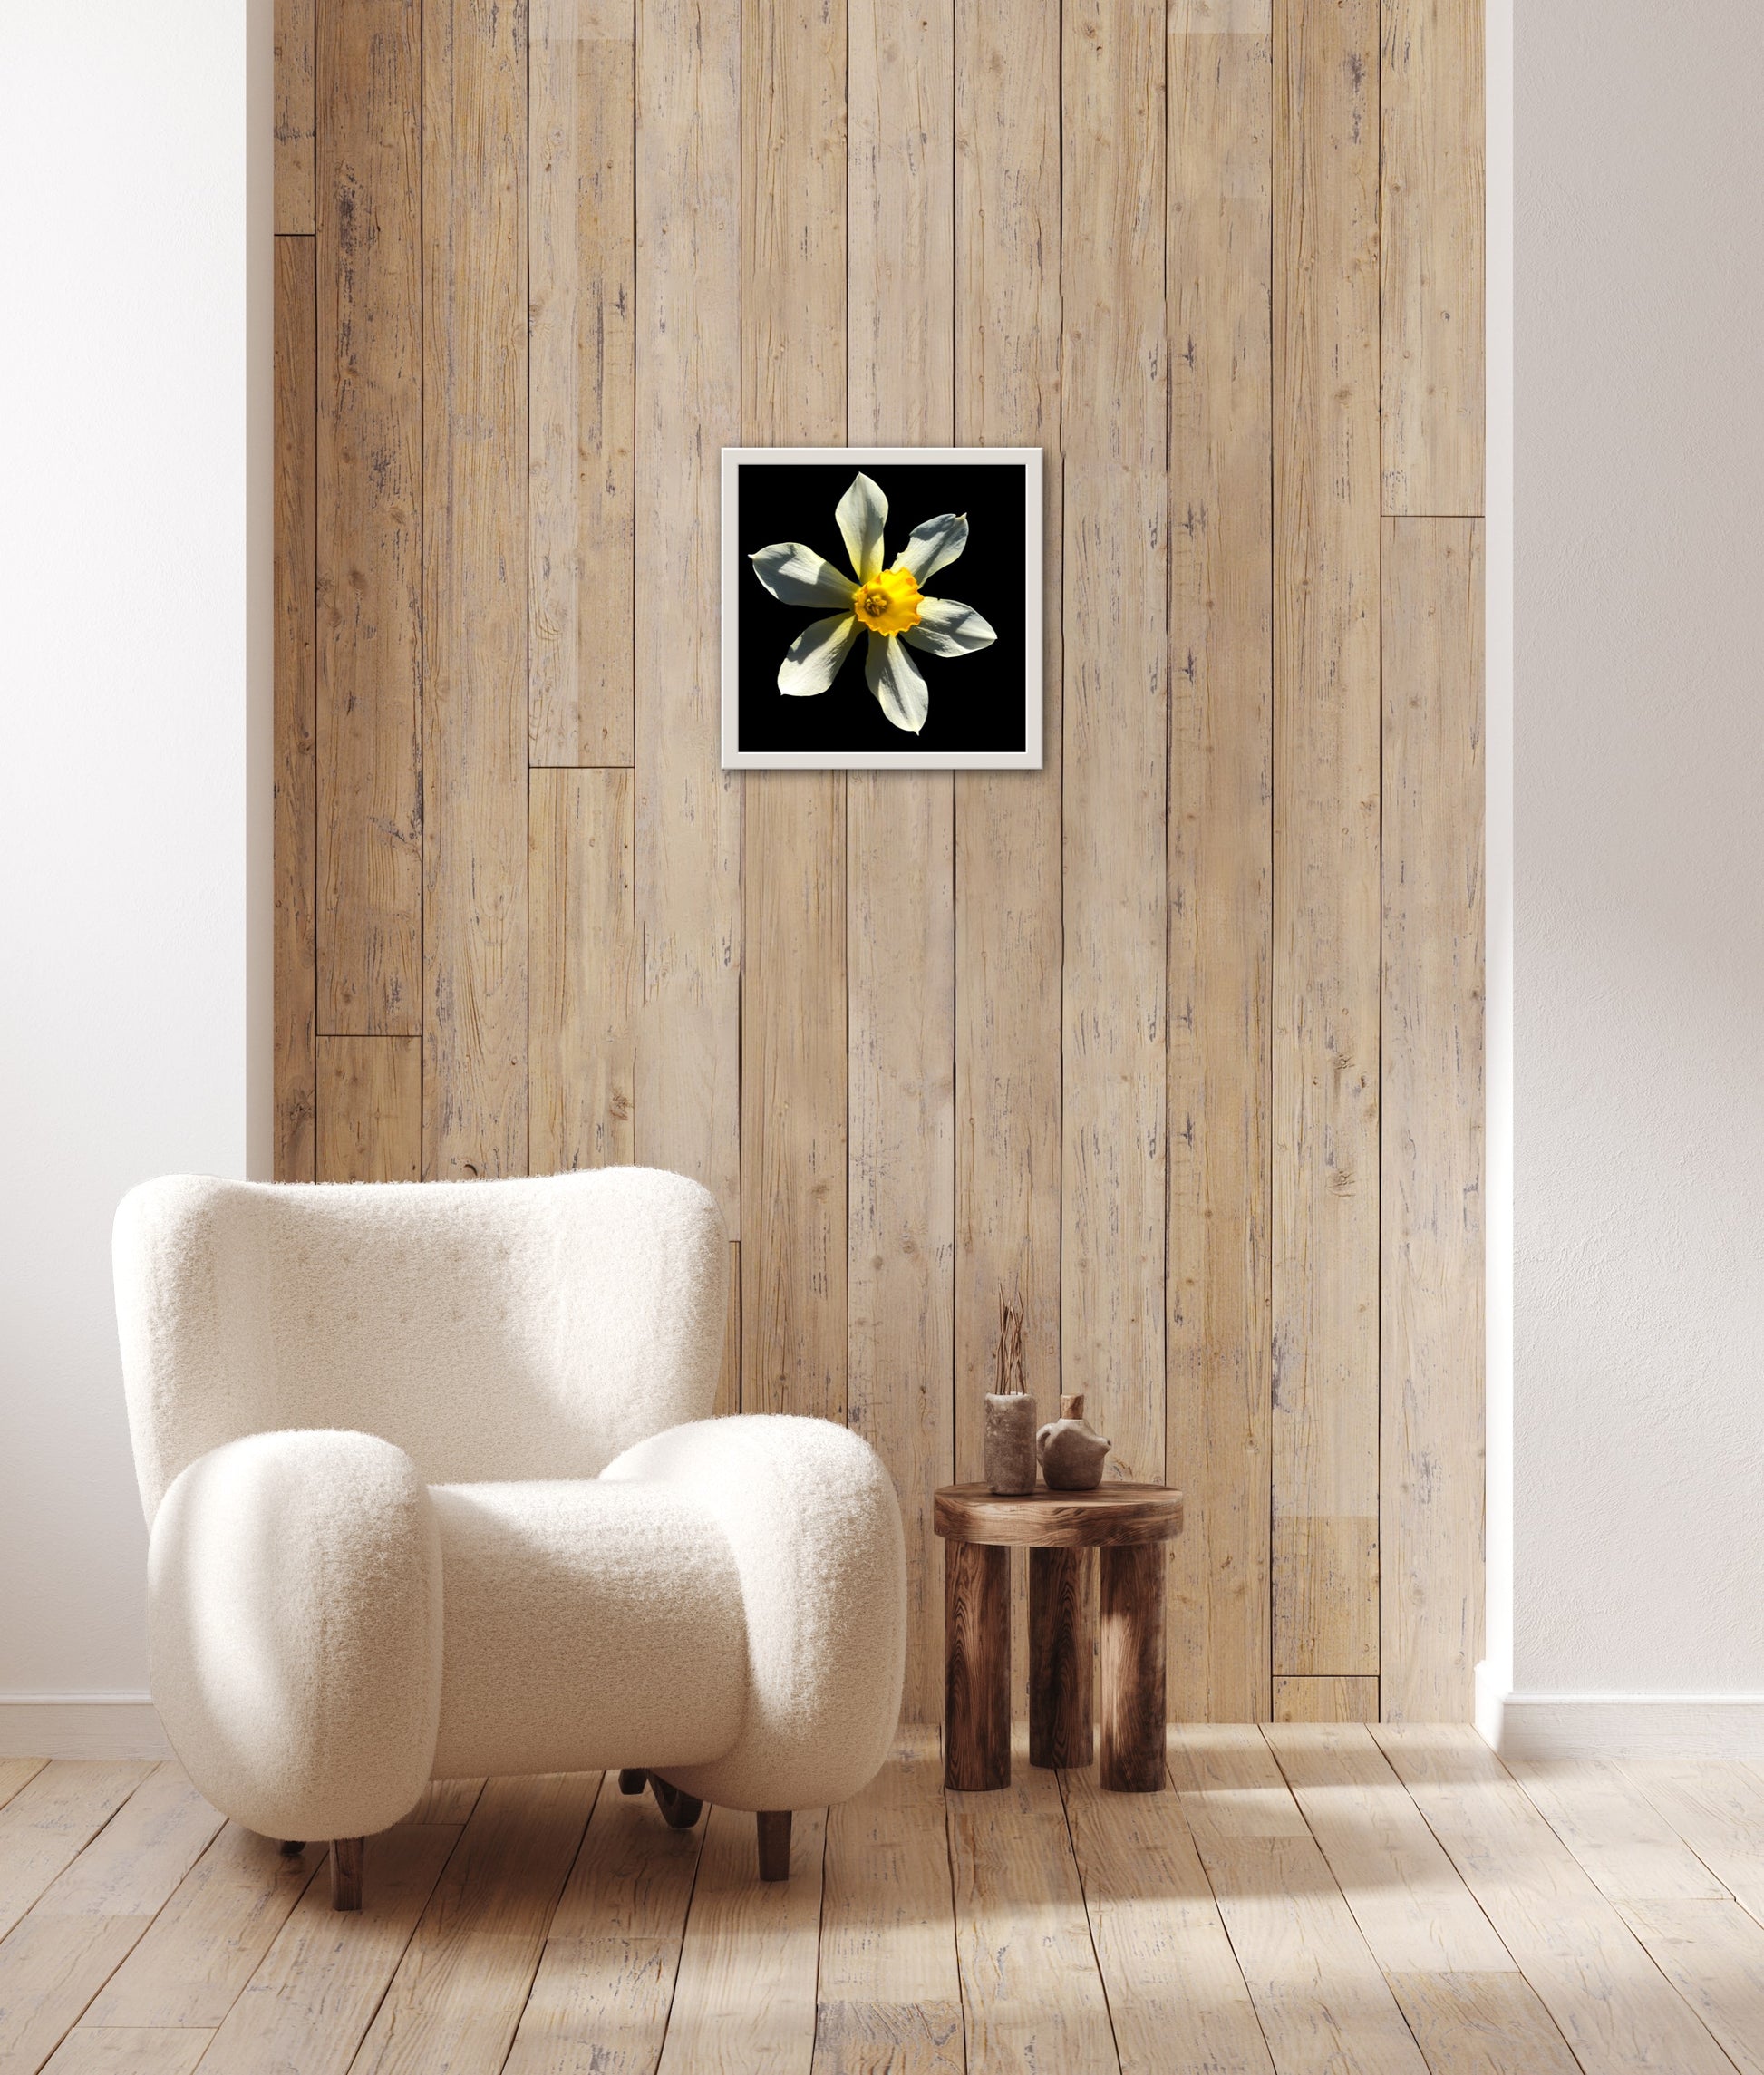 Daffodil Flower Print C-Type Print - Nature of Flowers